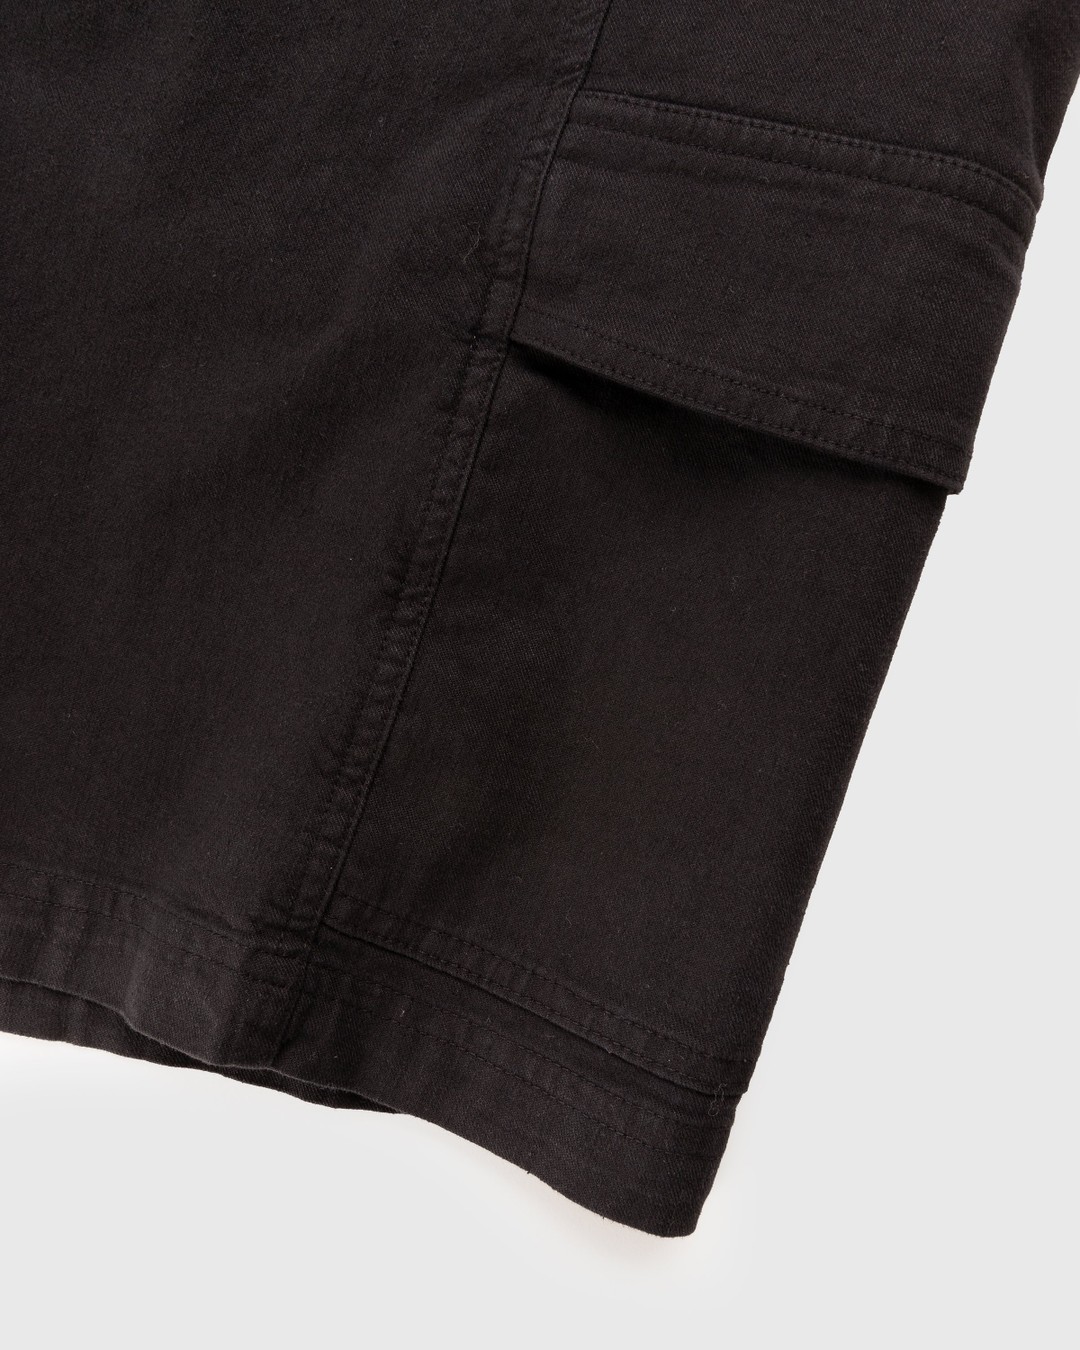 Winnie New York – Linen Cargo Shorts Black - Shorts - Black - Image 5